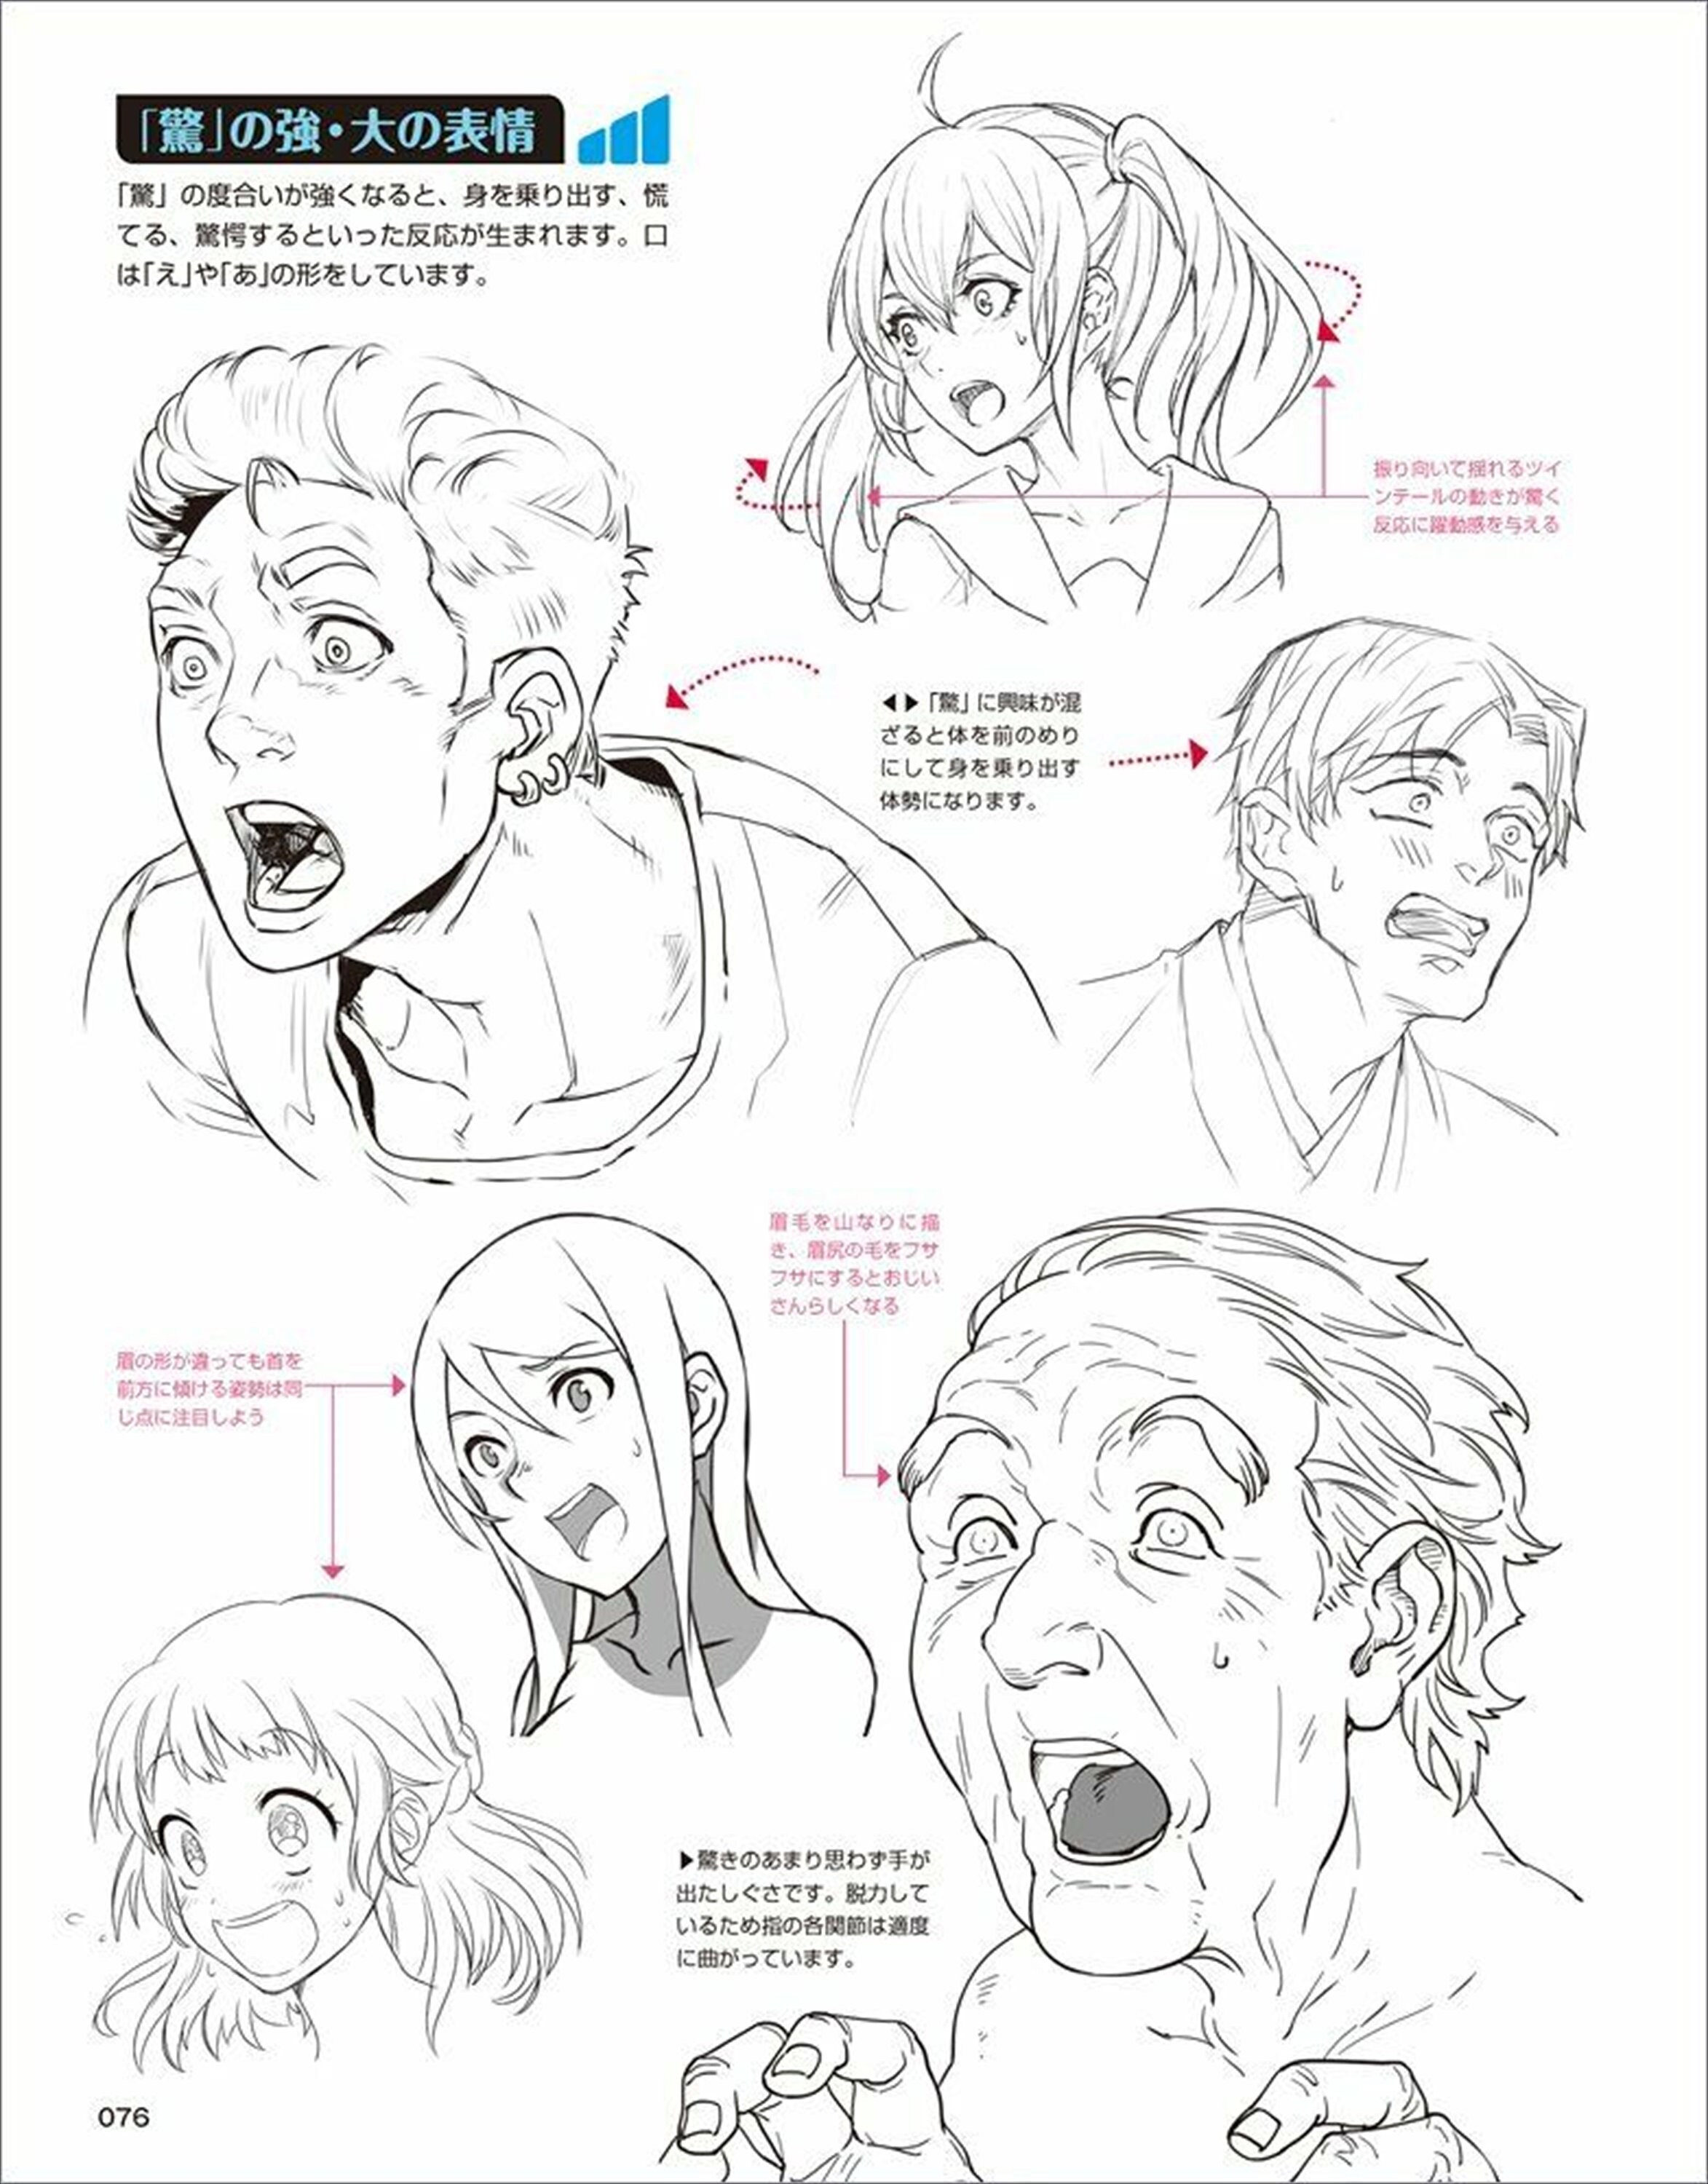 Download Kohina Hiruko, Expressive Anime Character Wallpaper |  Wallpapers.com